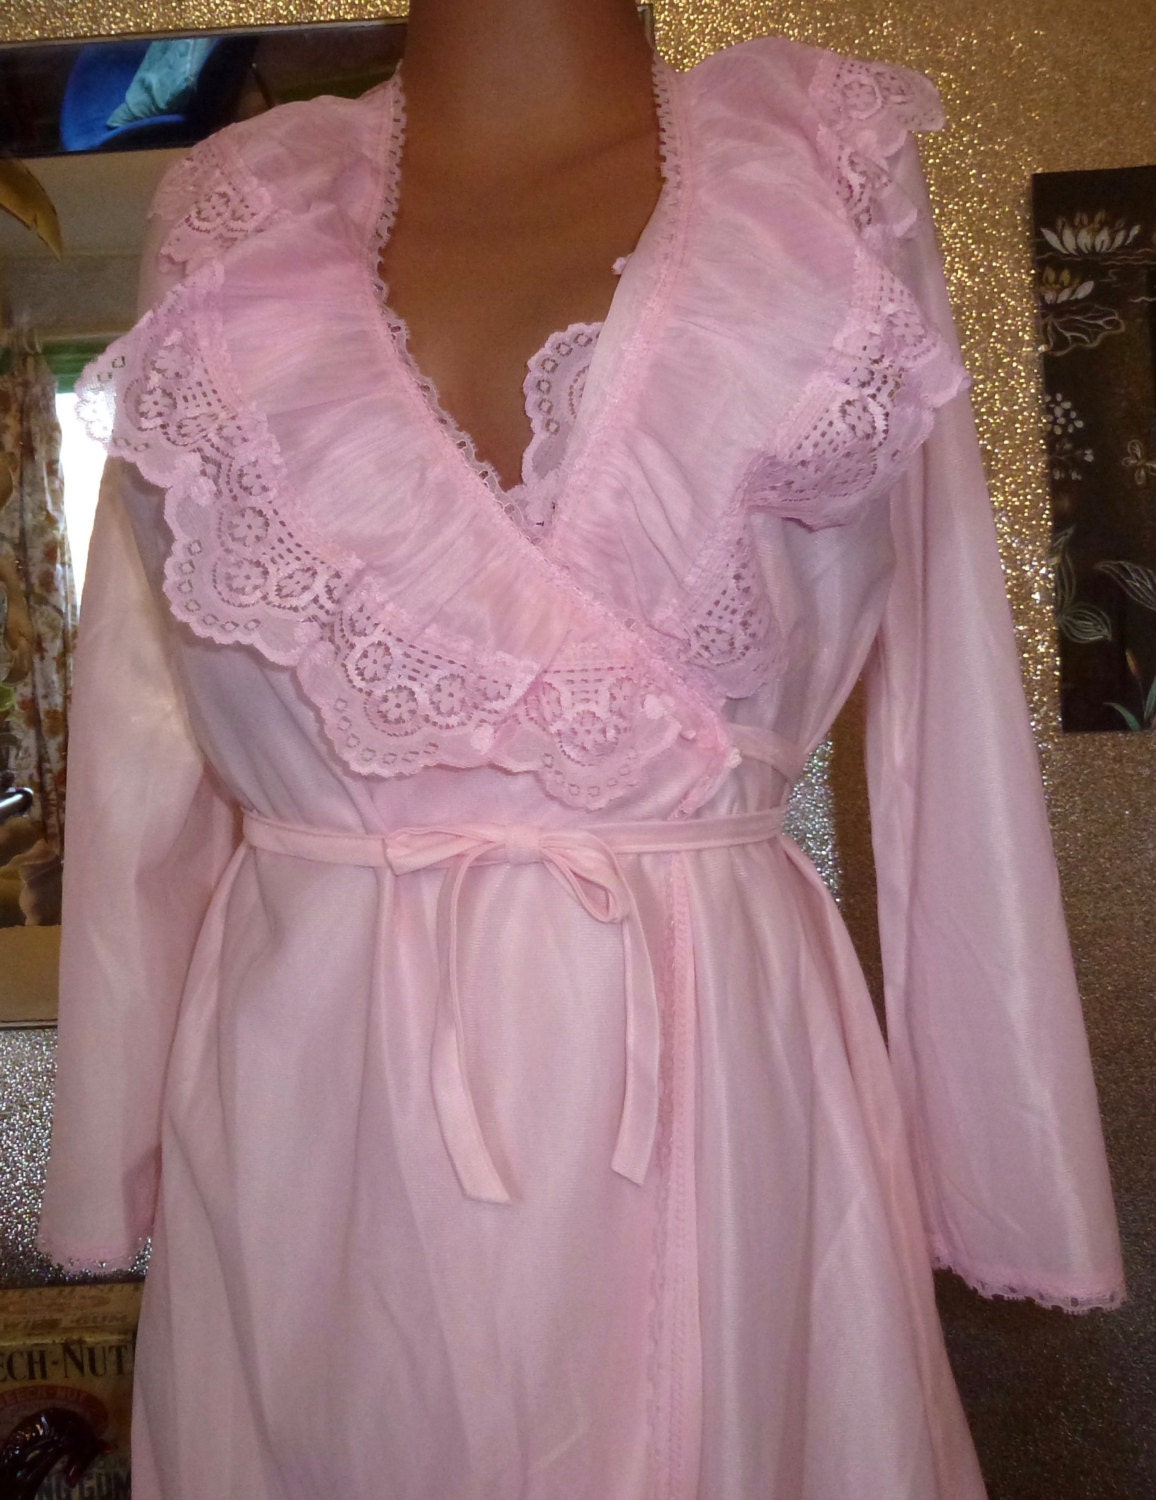 Vintage 70's peignoir negligee set in pink nylon pleated